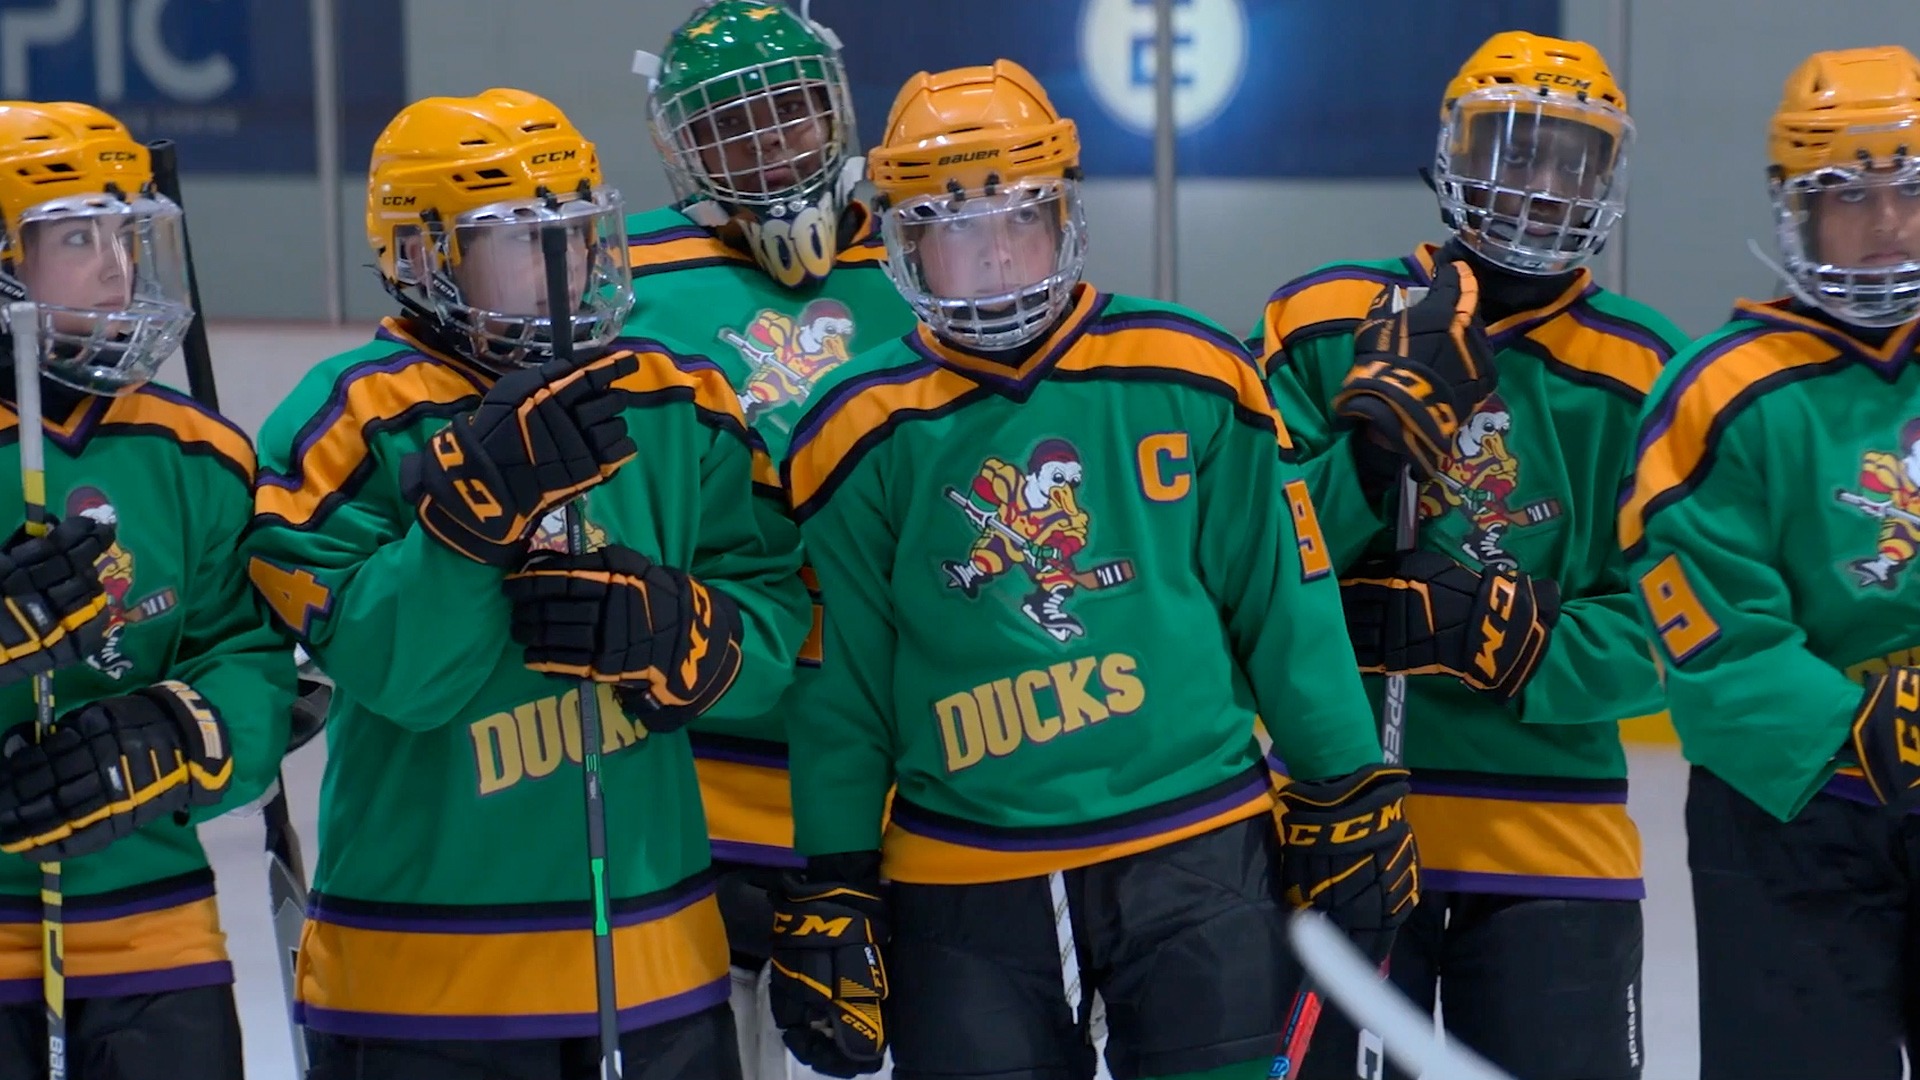 The Mighty Ducks: Game Changers' Season 2 Finale, Episode 10 Recap